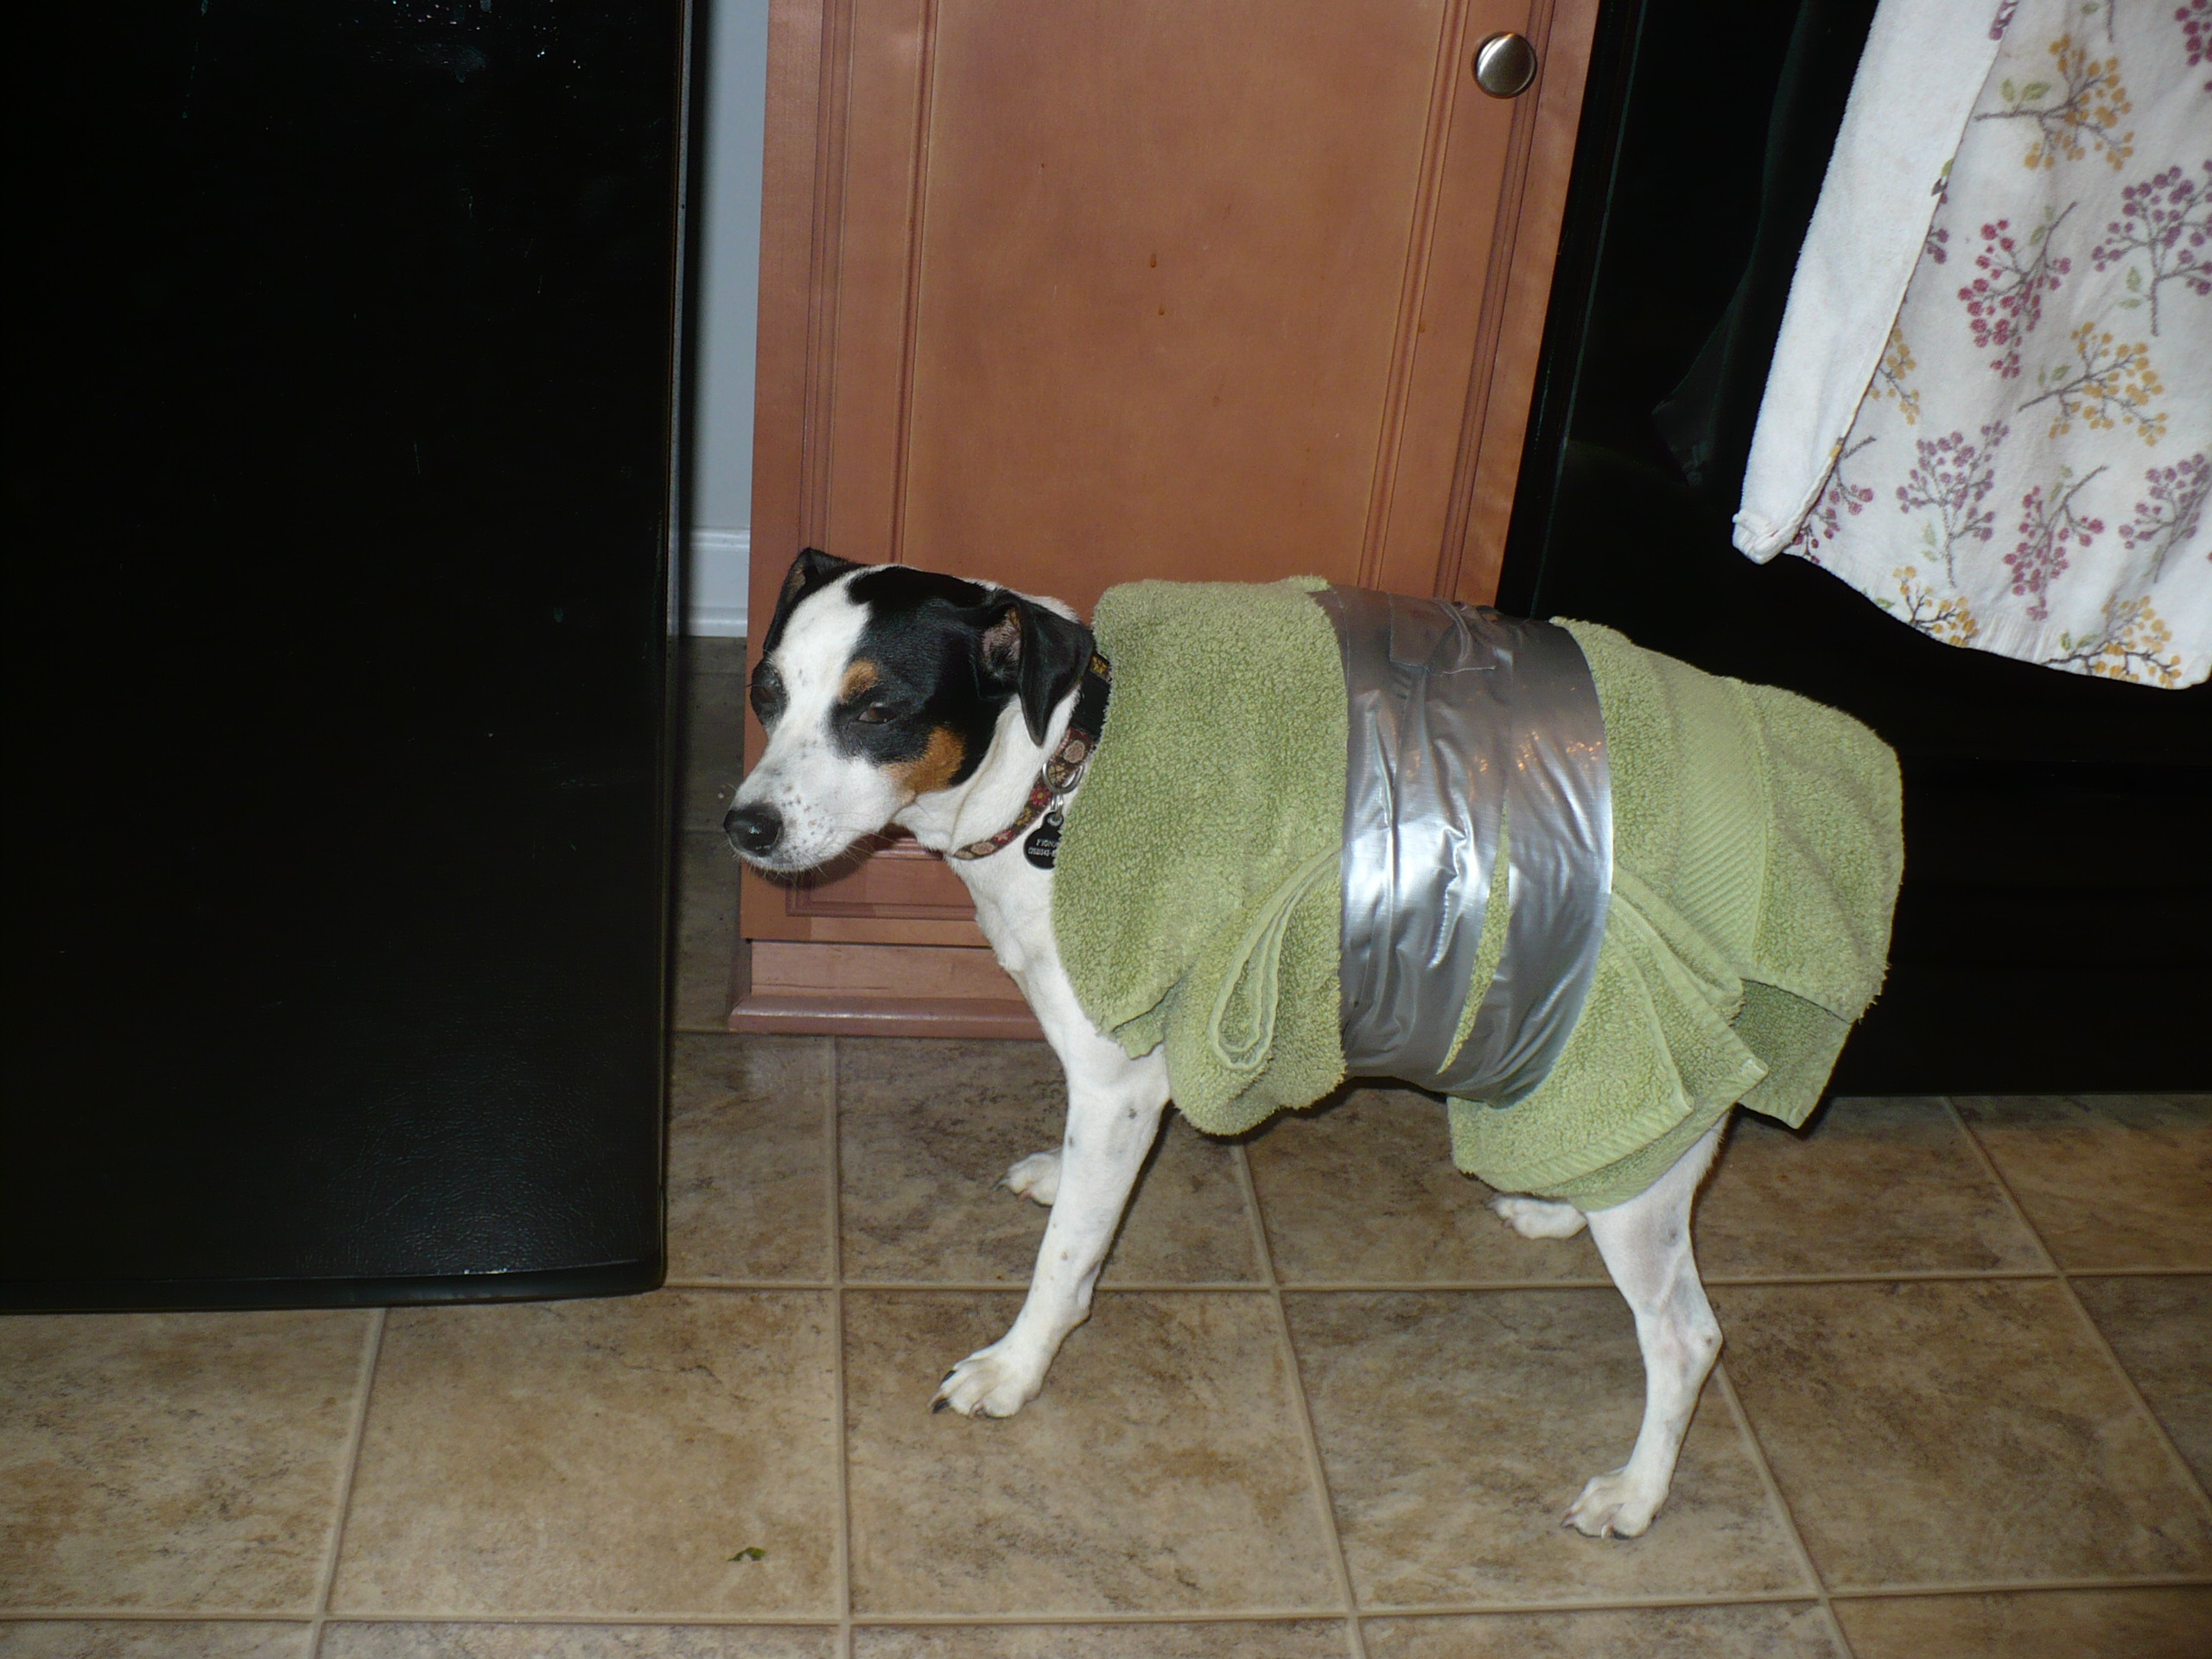 Best ideas about Dog Thundershirt DIY
. Save or Pin The Redneck Thundershirt Now.